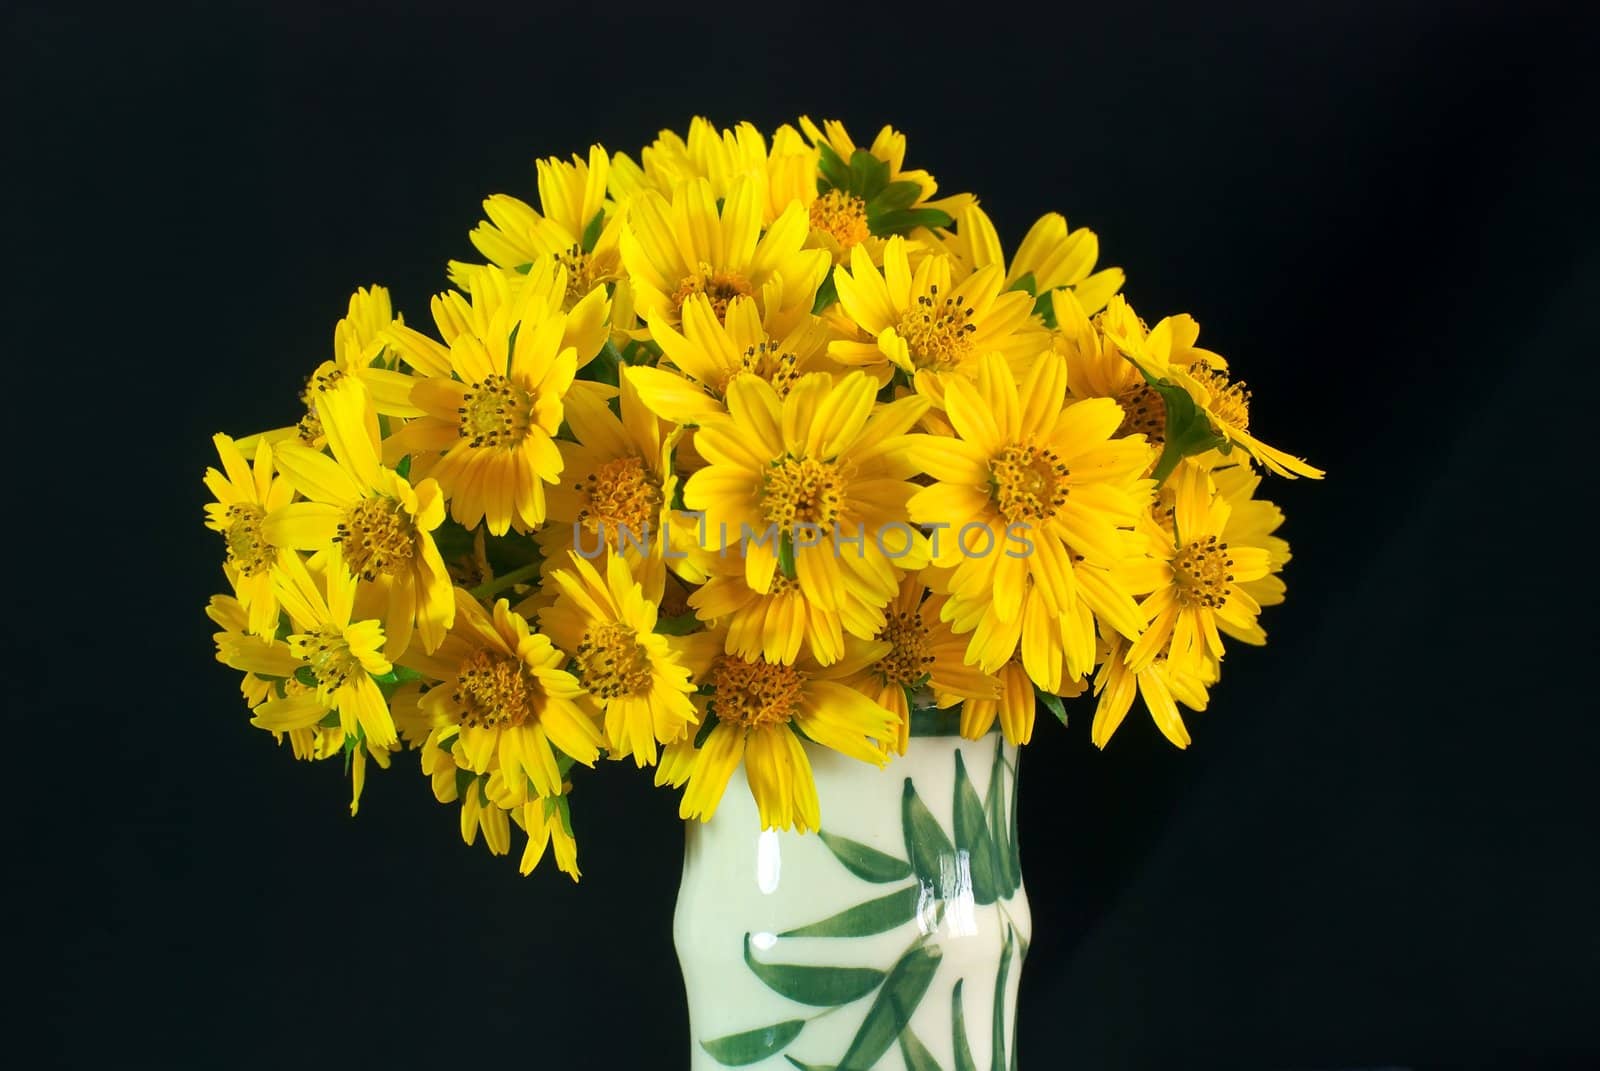 Wild Chrysanthemum by xfdly5